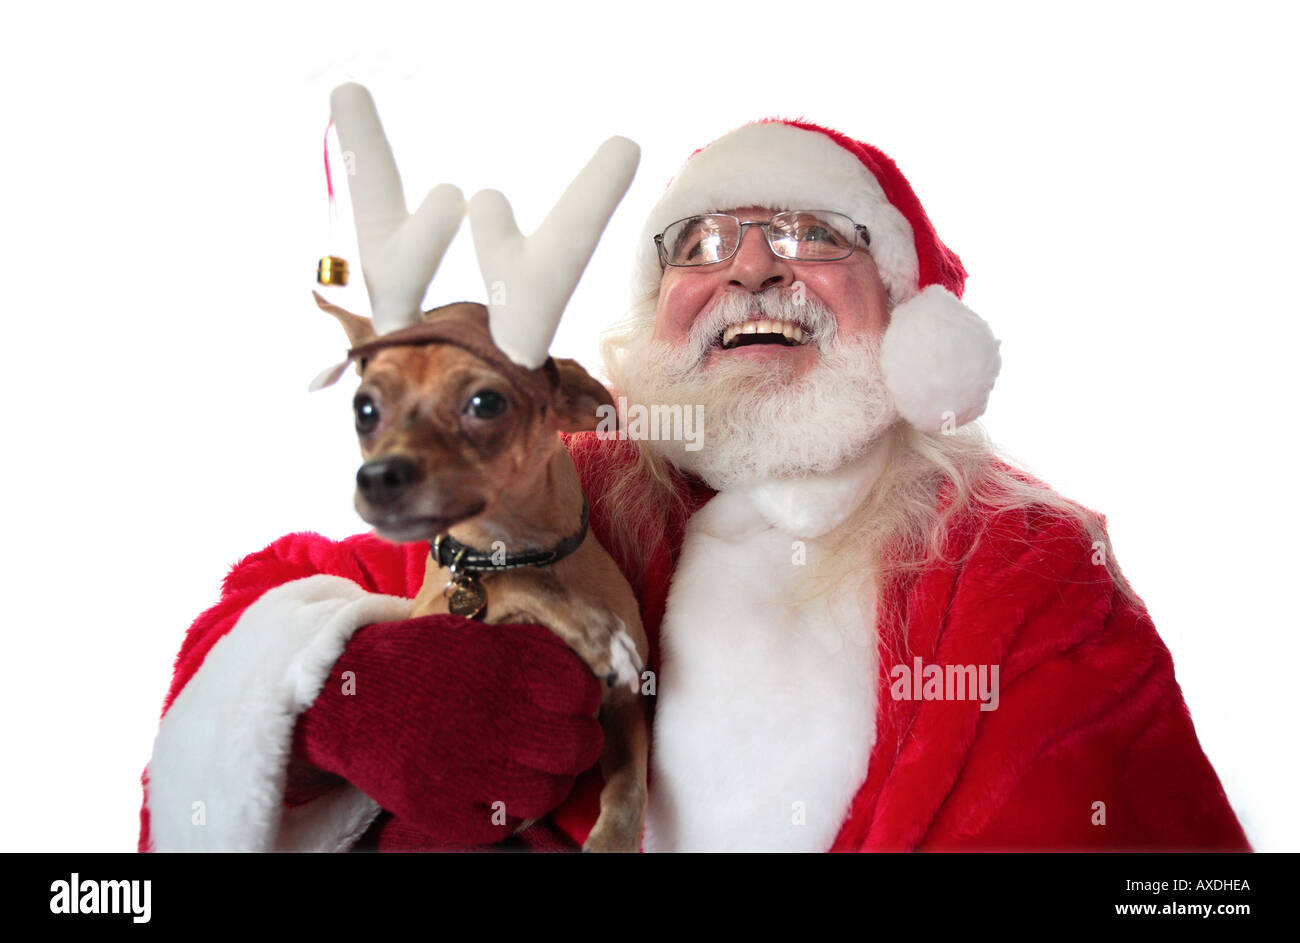 Santa with a Funny Small Dog Stock Photo